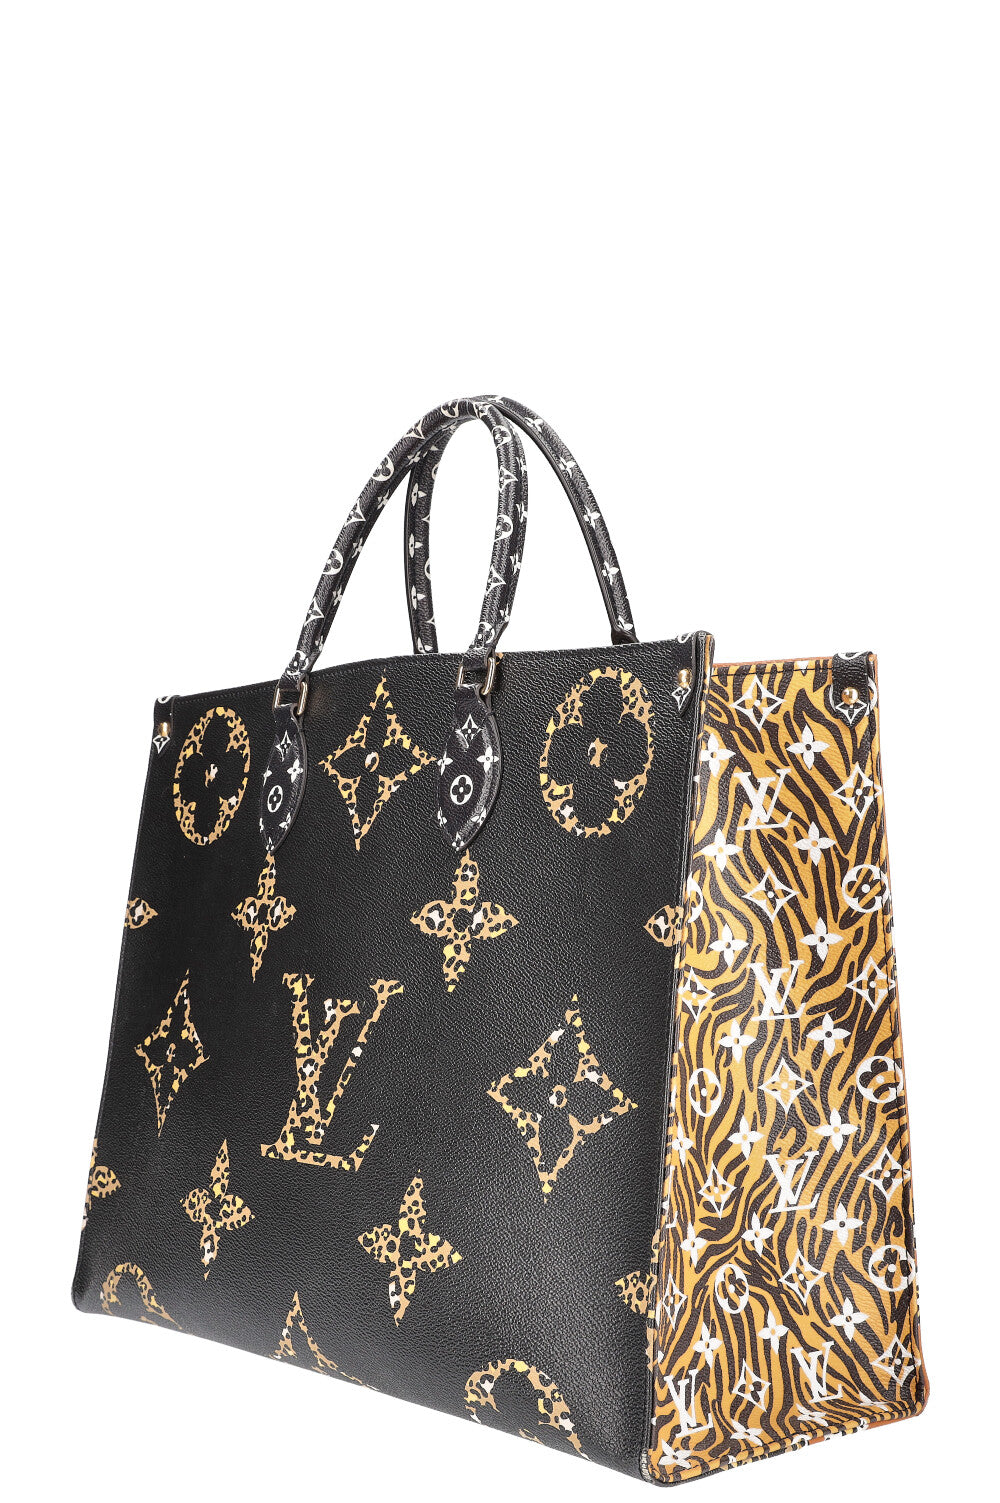 Go Wild: Win the Louis Vuitton Onthego Jungle Bag - StockX News